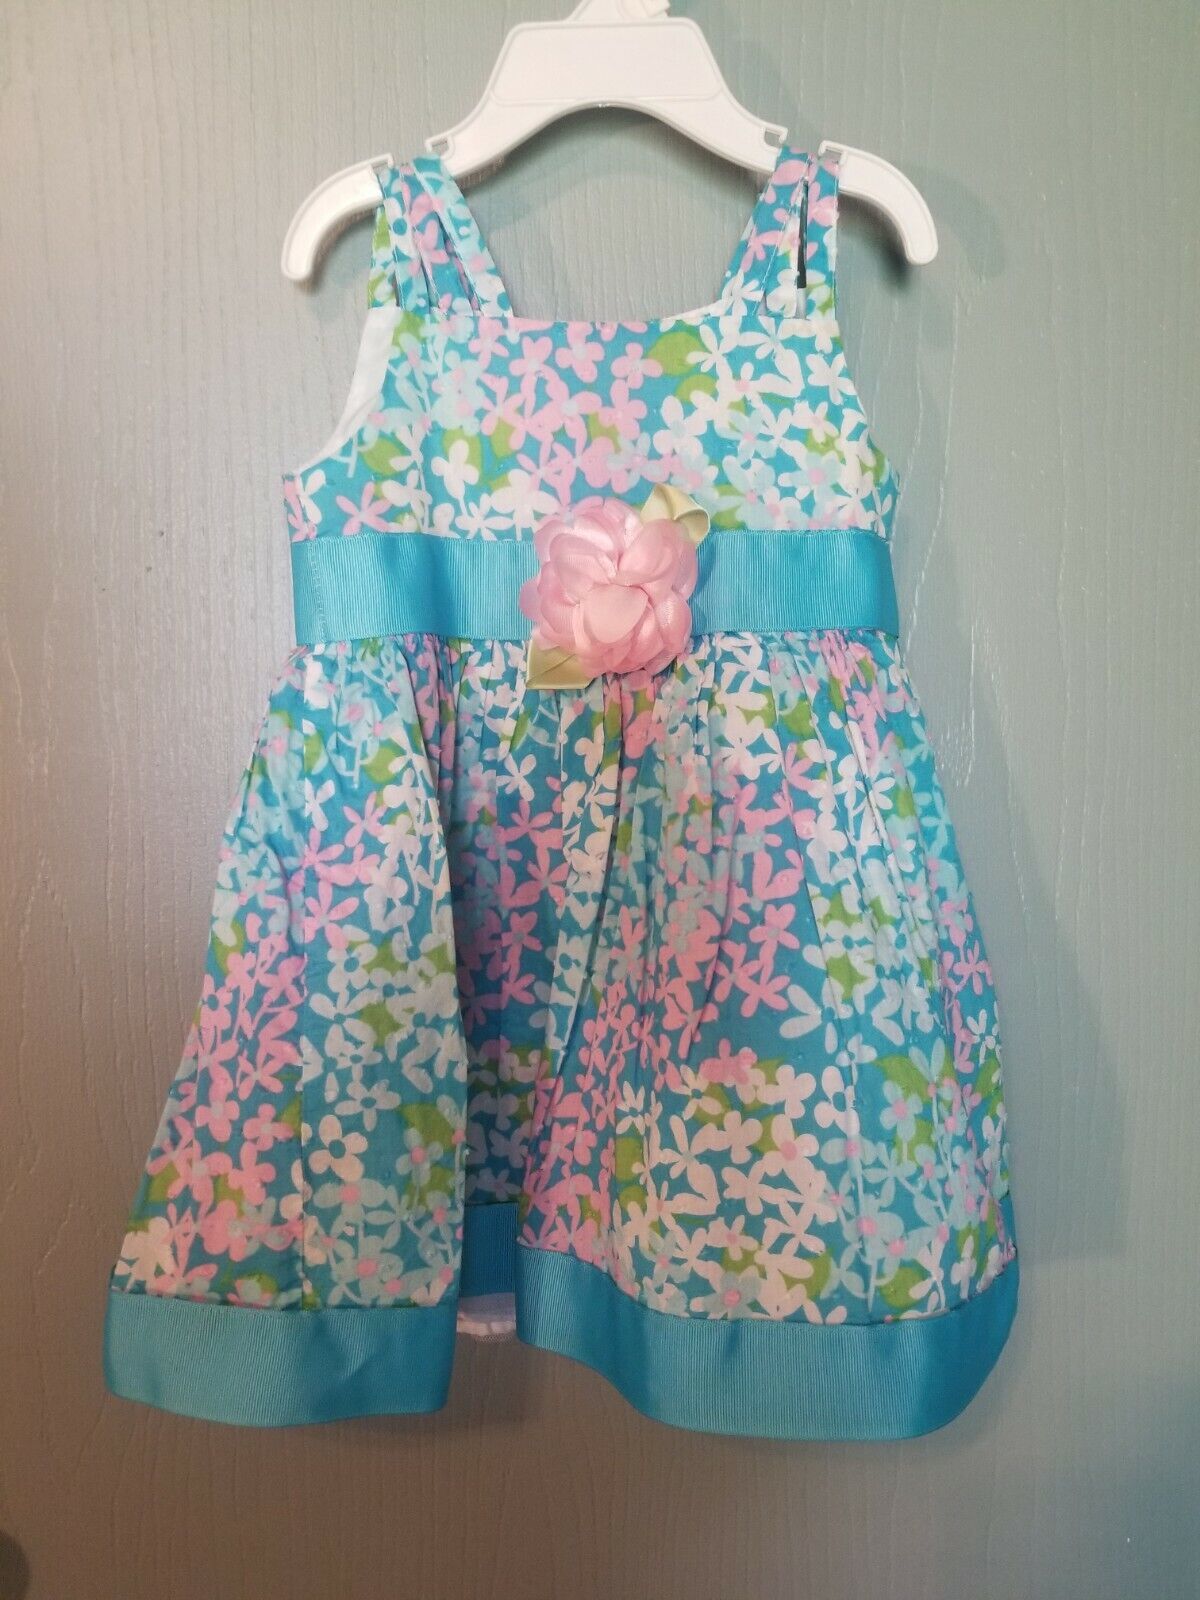 Youngland - Floral Sundress Dress Size 2T     B17 - $7.85